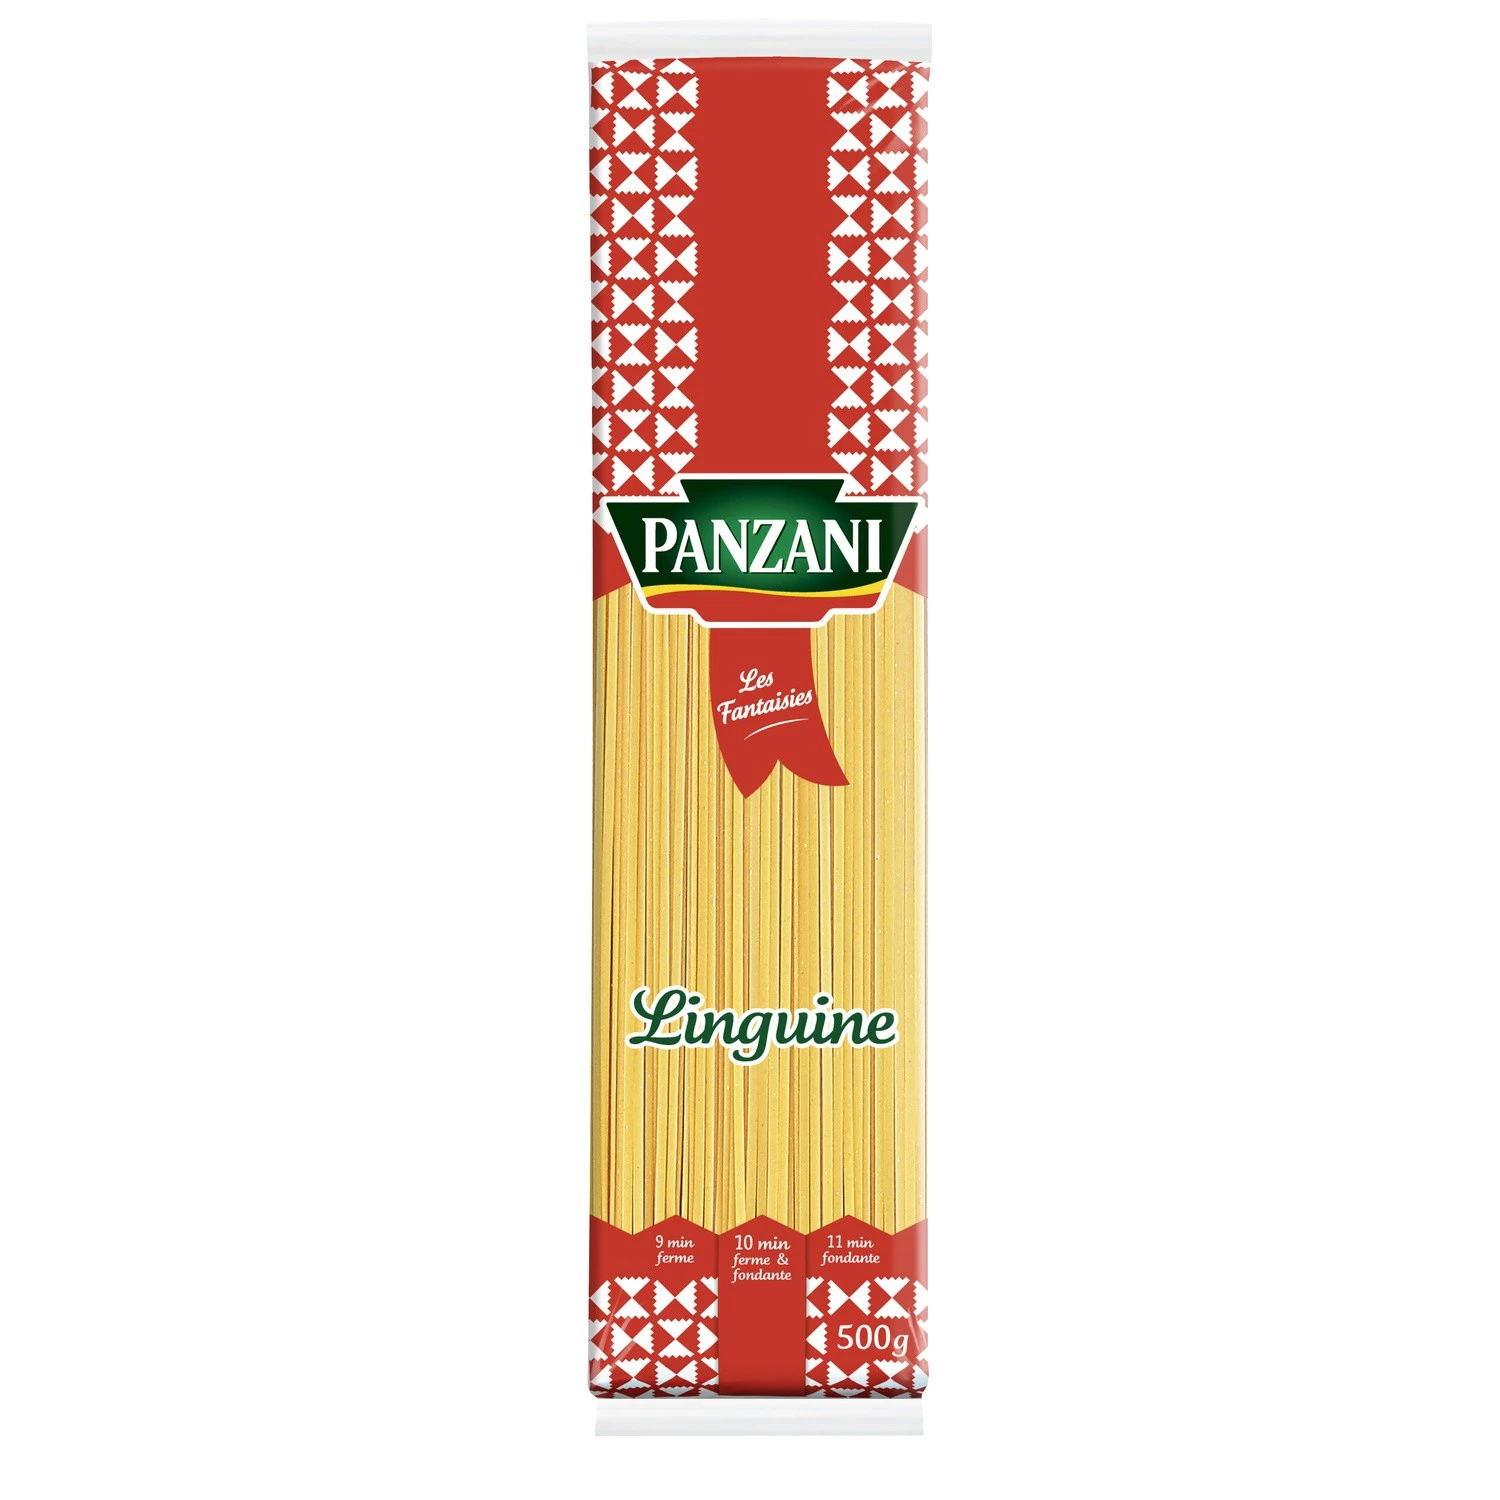 Spaghetti Linguine Pasta, 500g - PANZANI